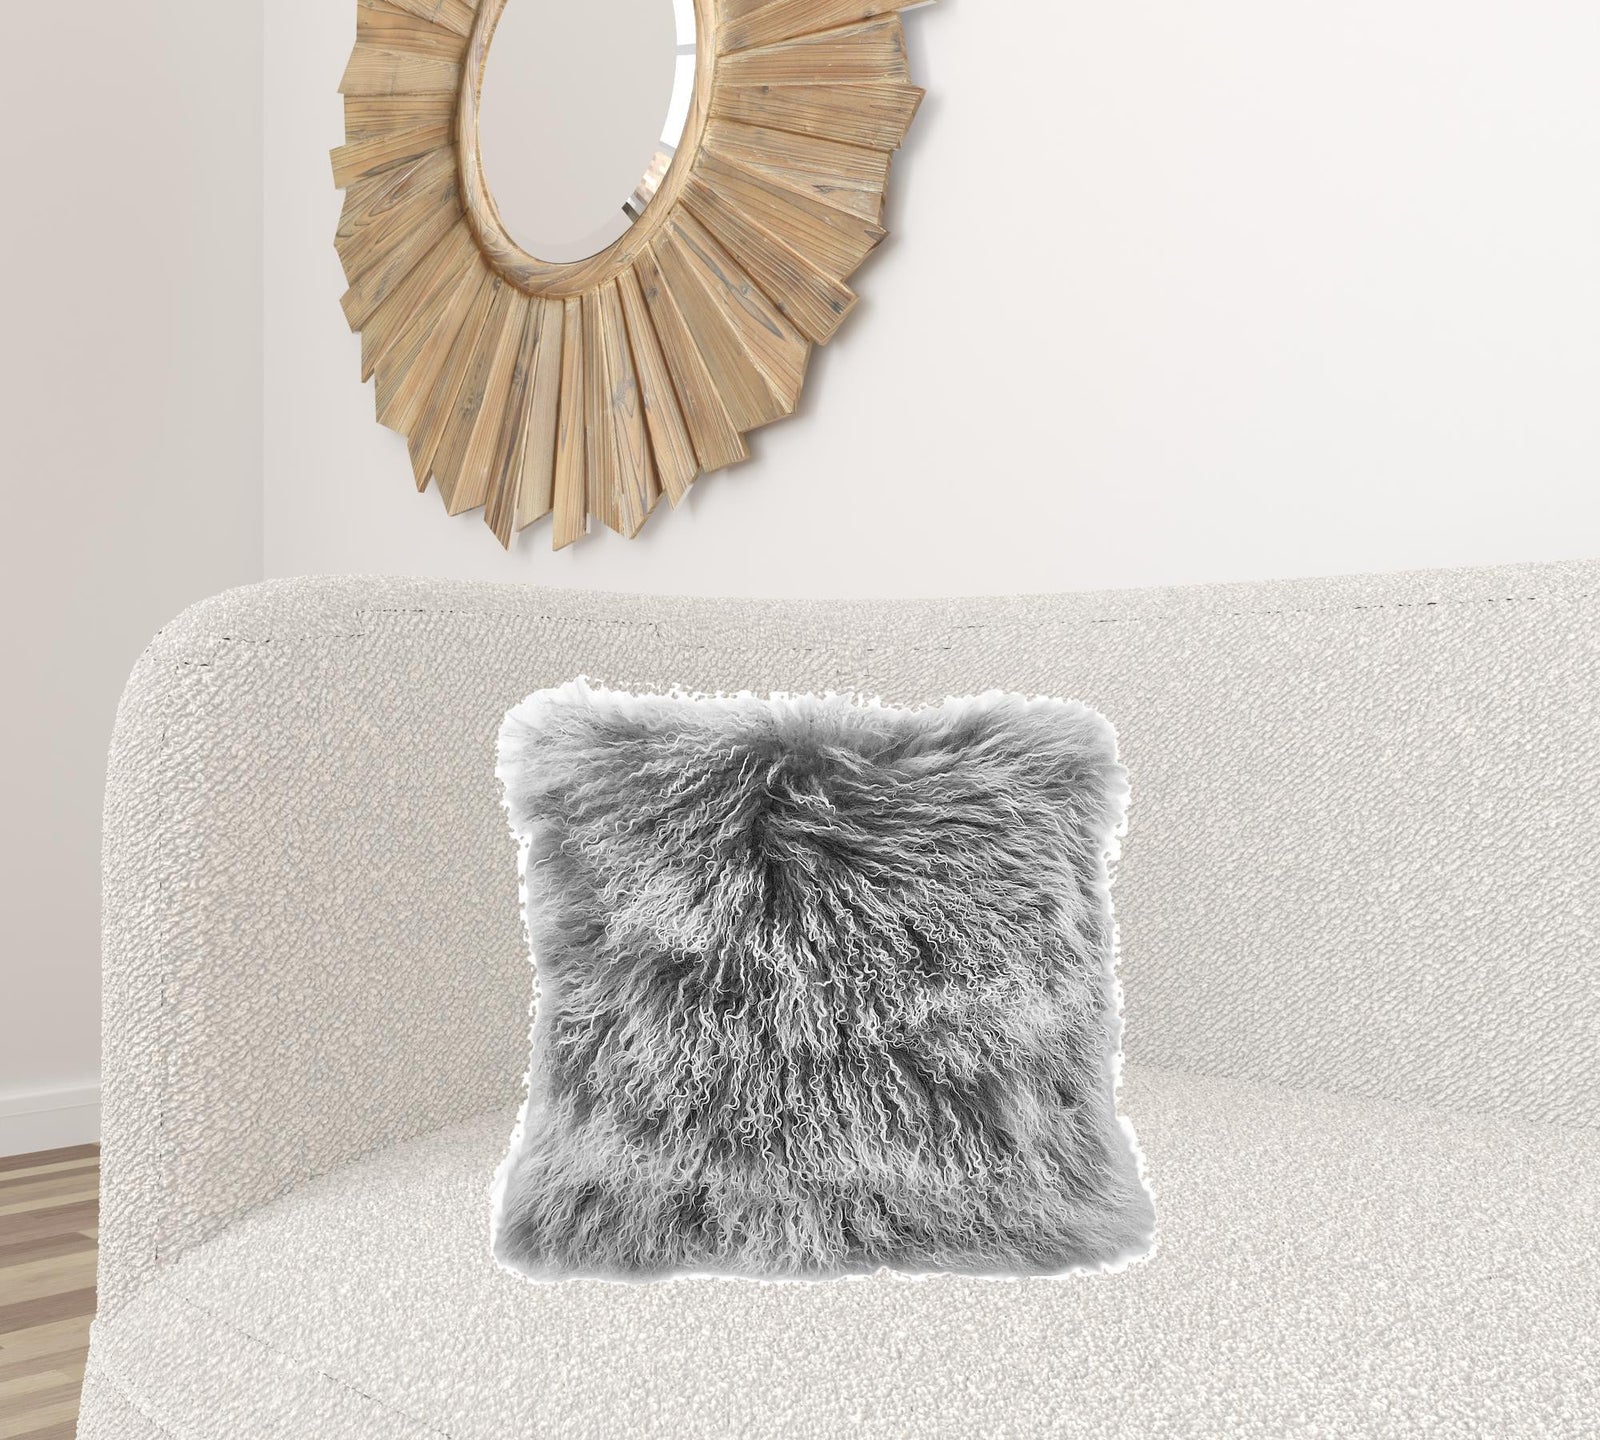 20" Grey Genuine Tibetan Lamb Fur Pillow With Microsuede Backing